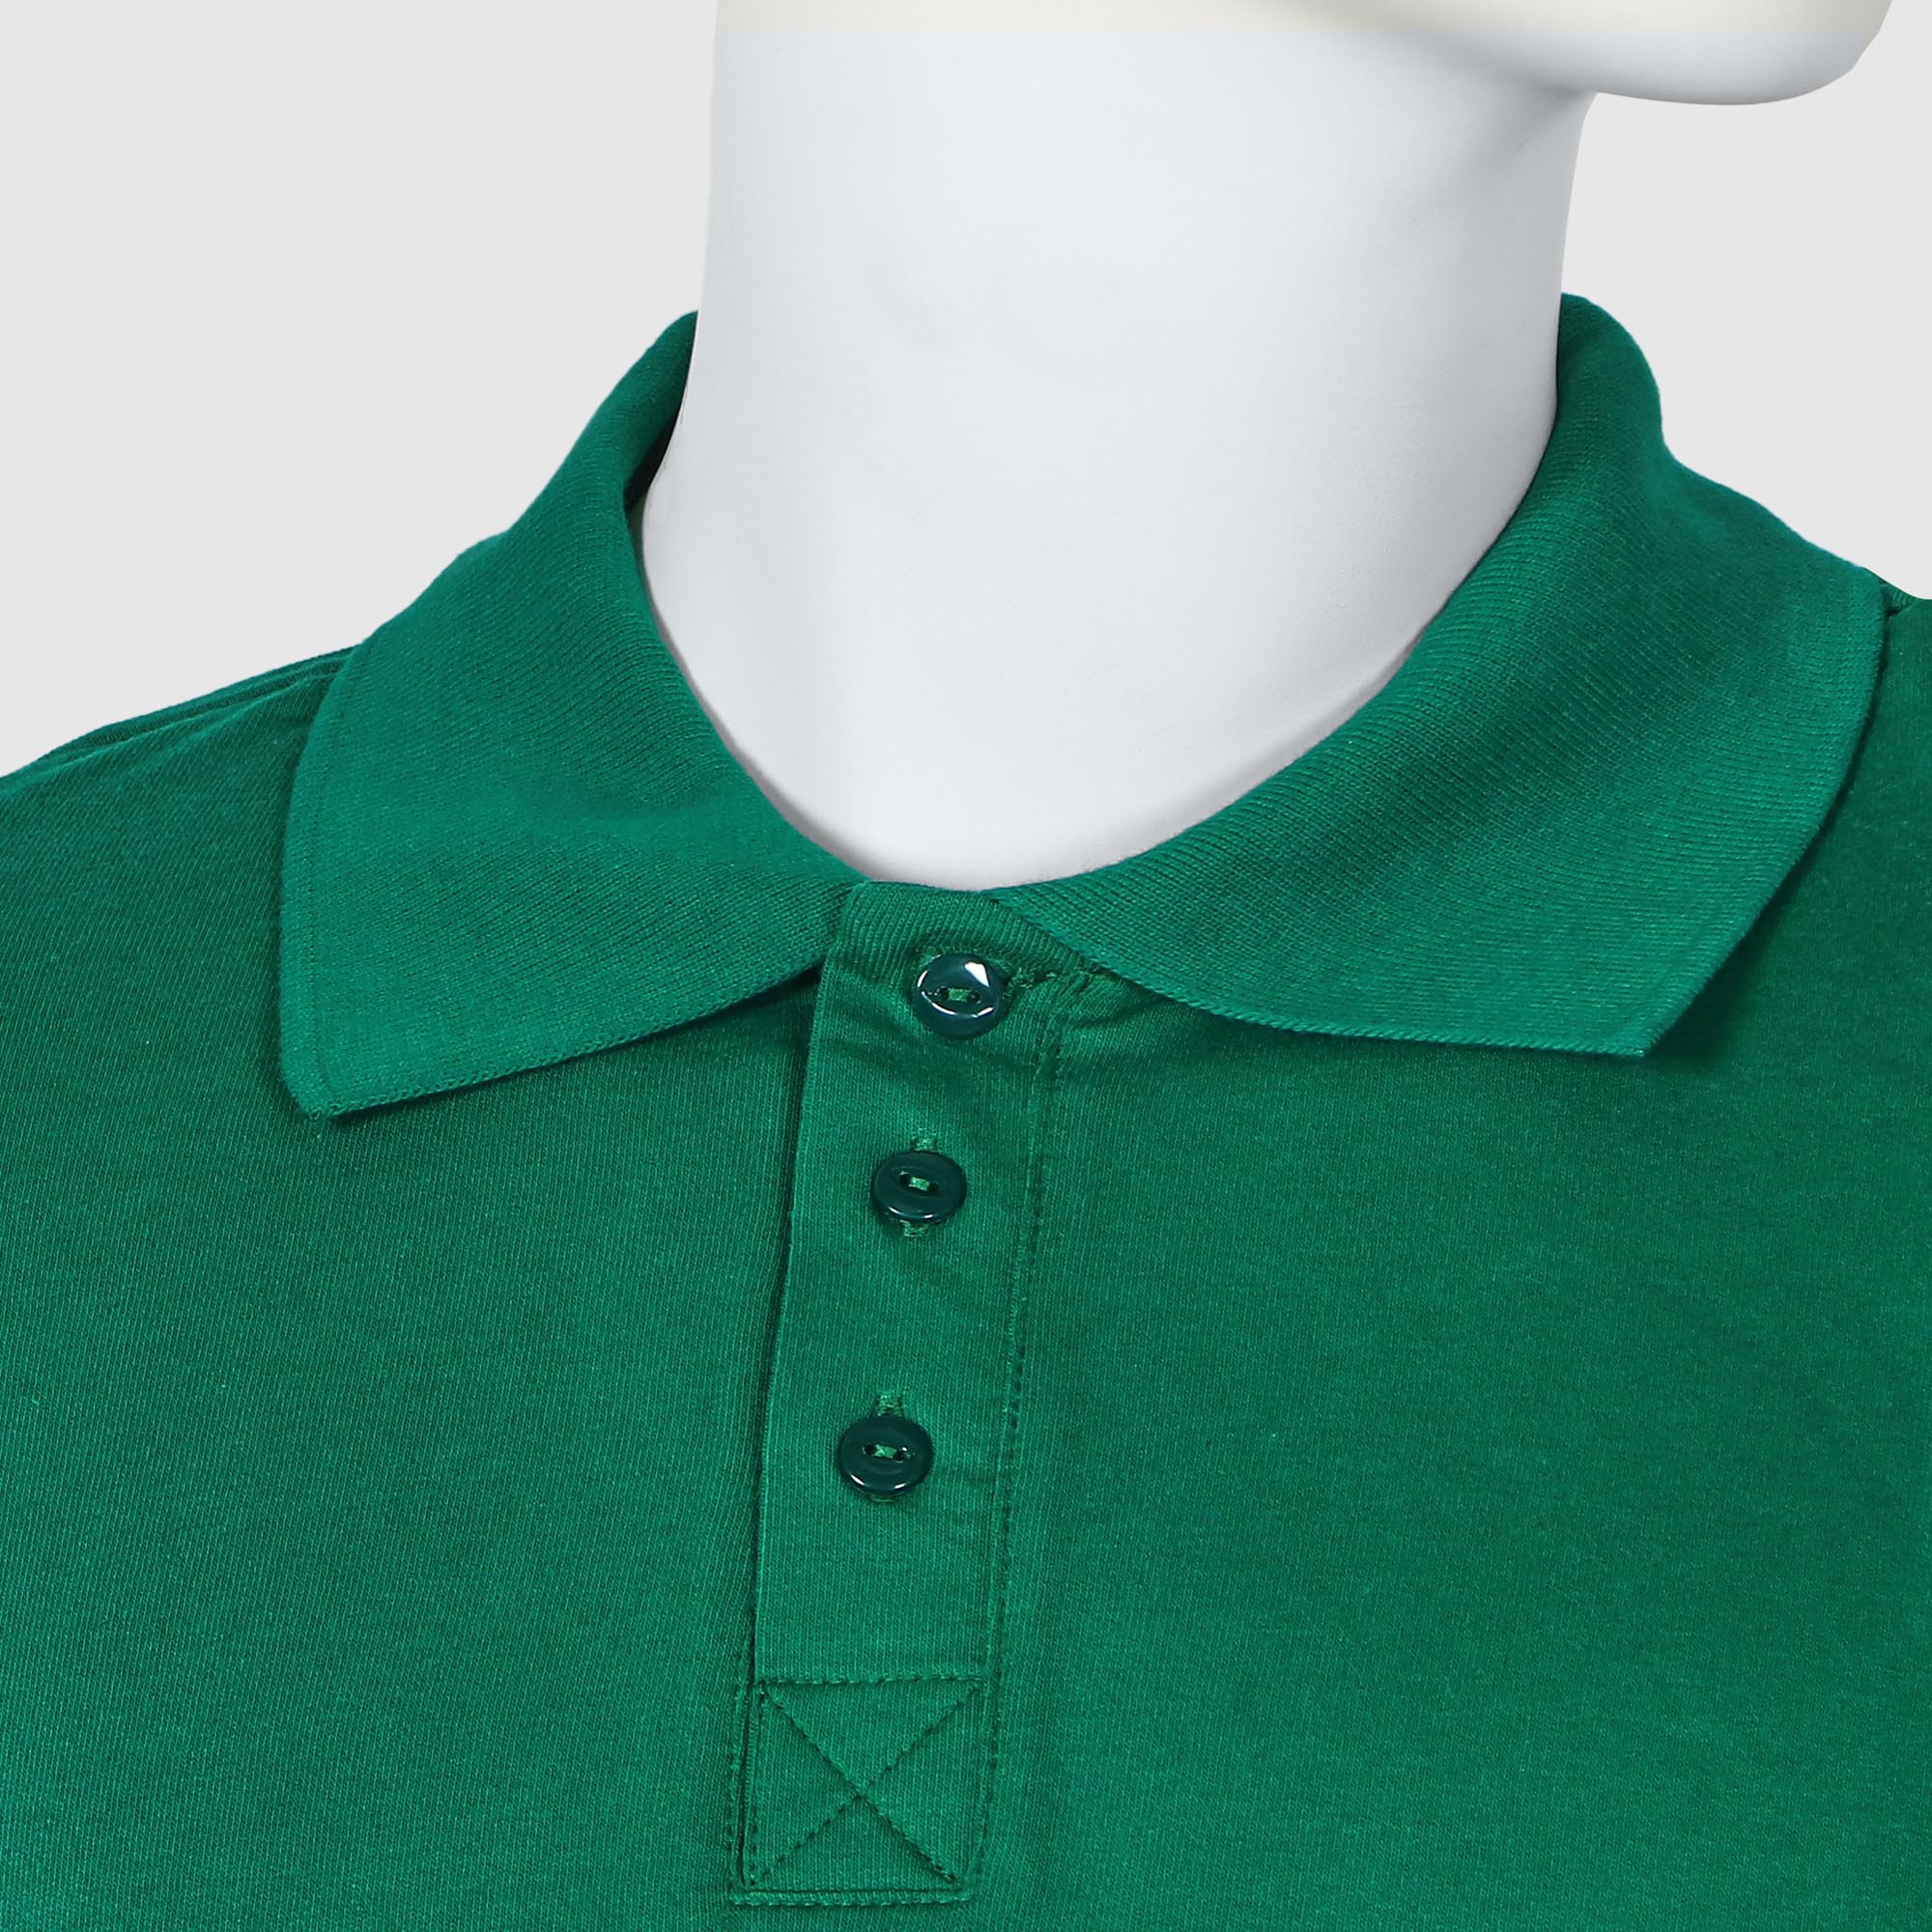 Мужская футболка-поло Diva Teks зелёная (DTD-09), цвет зелёный, размер 50-52 - фото 4